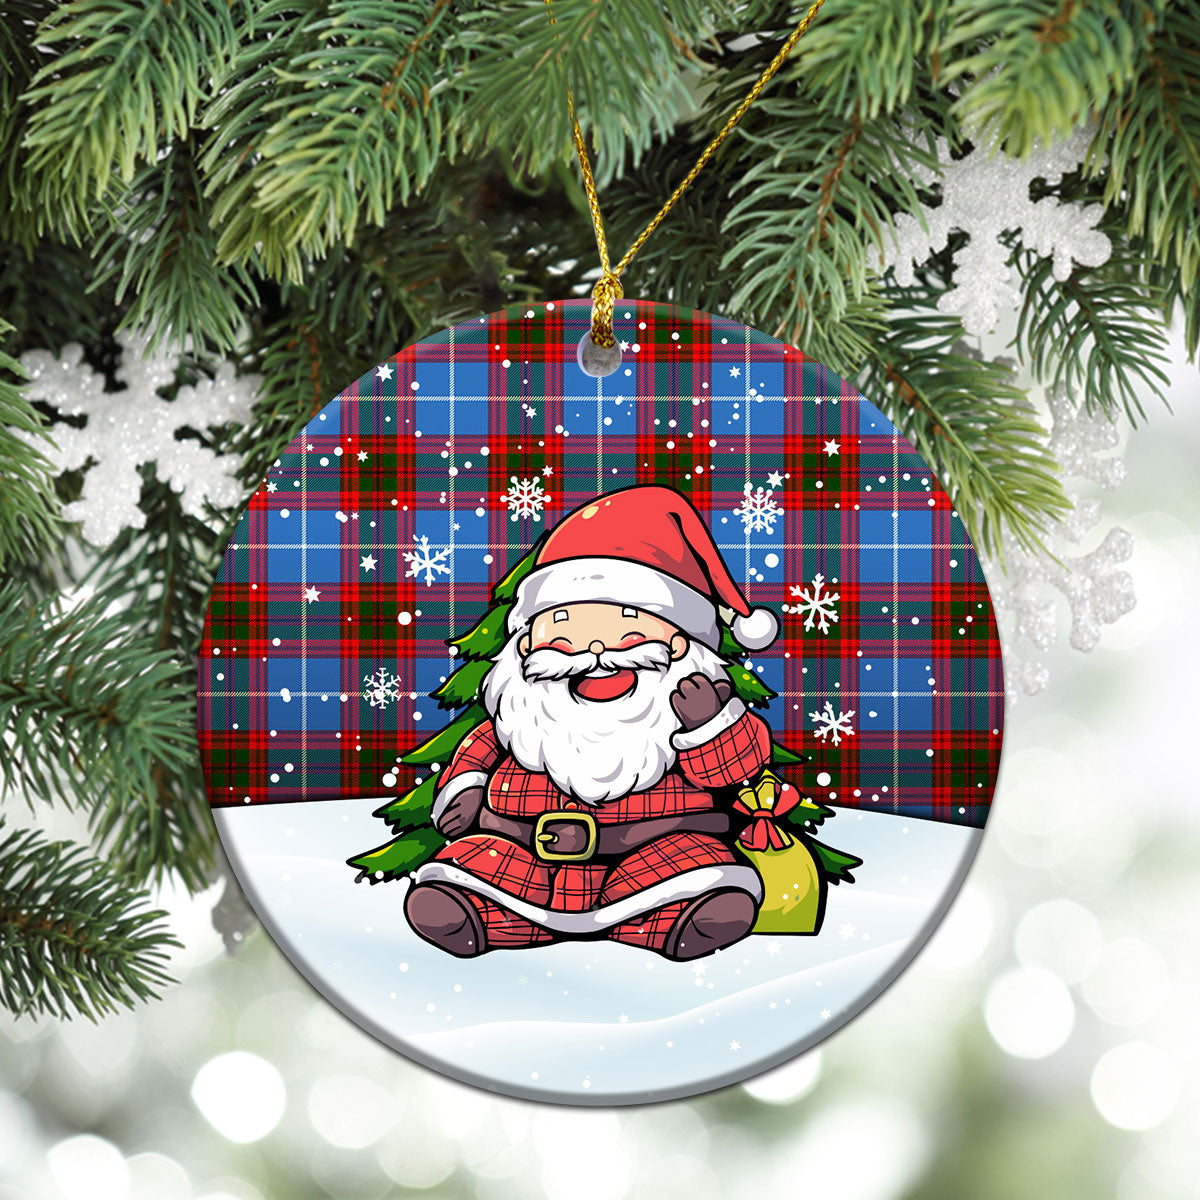 Pennycook Tartan Christmas Ceramic Ornament - Scottish Santa Style